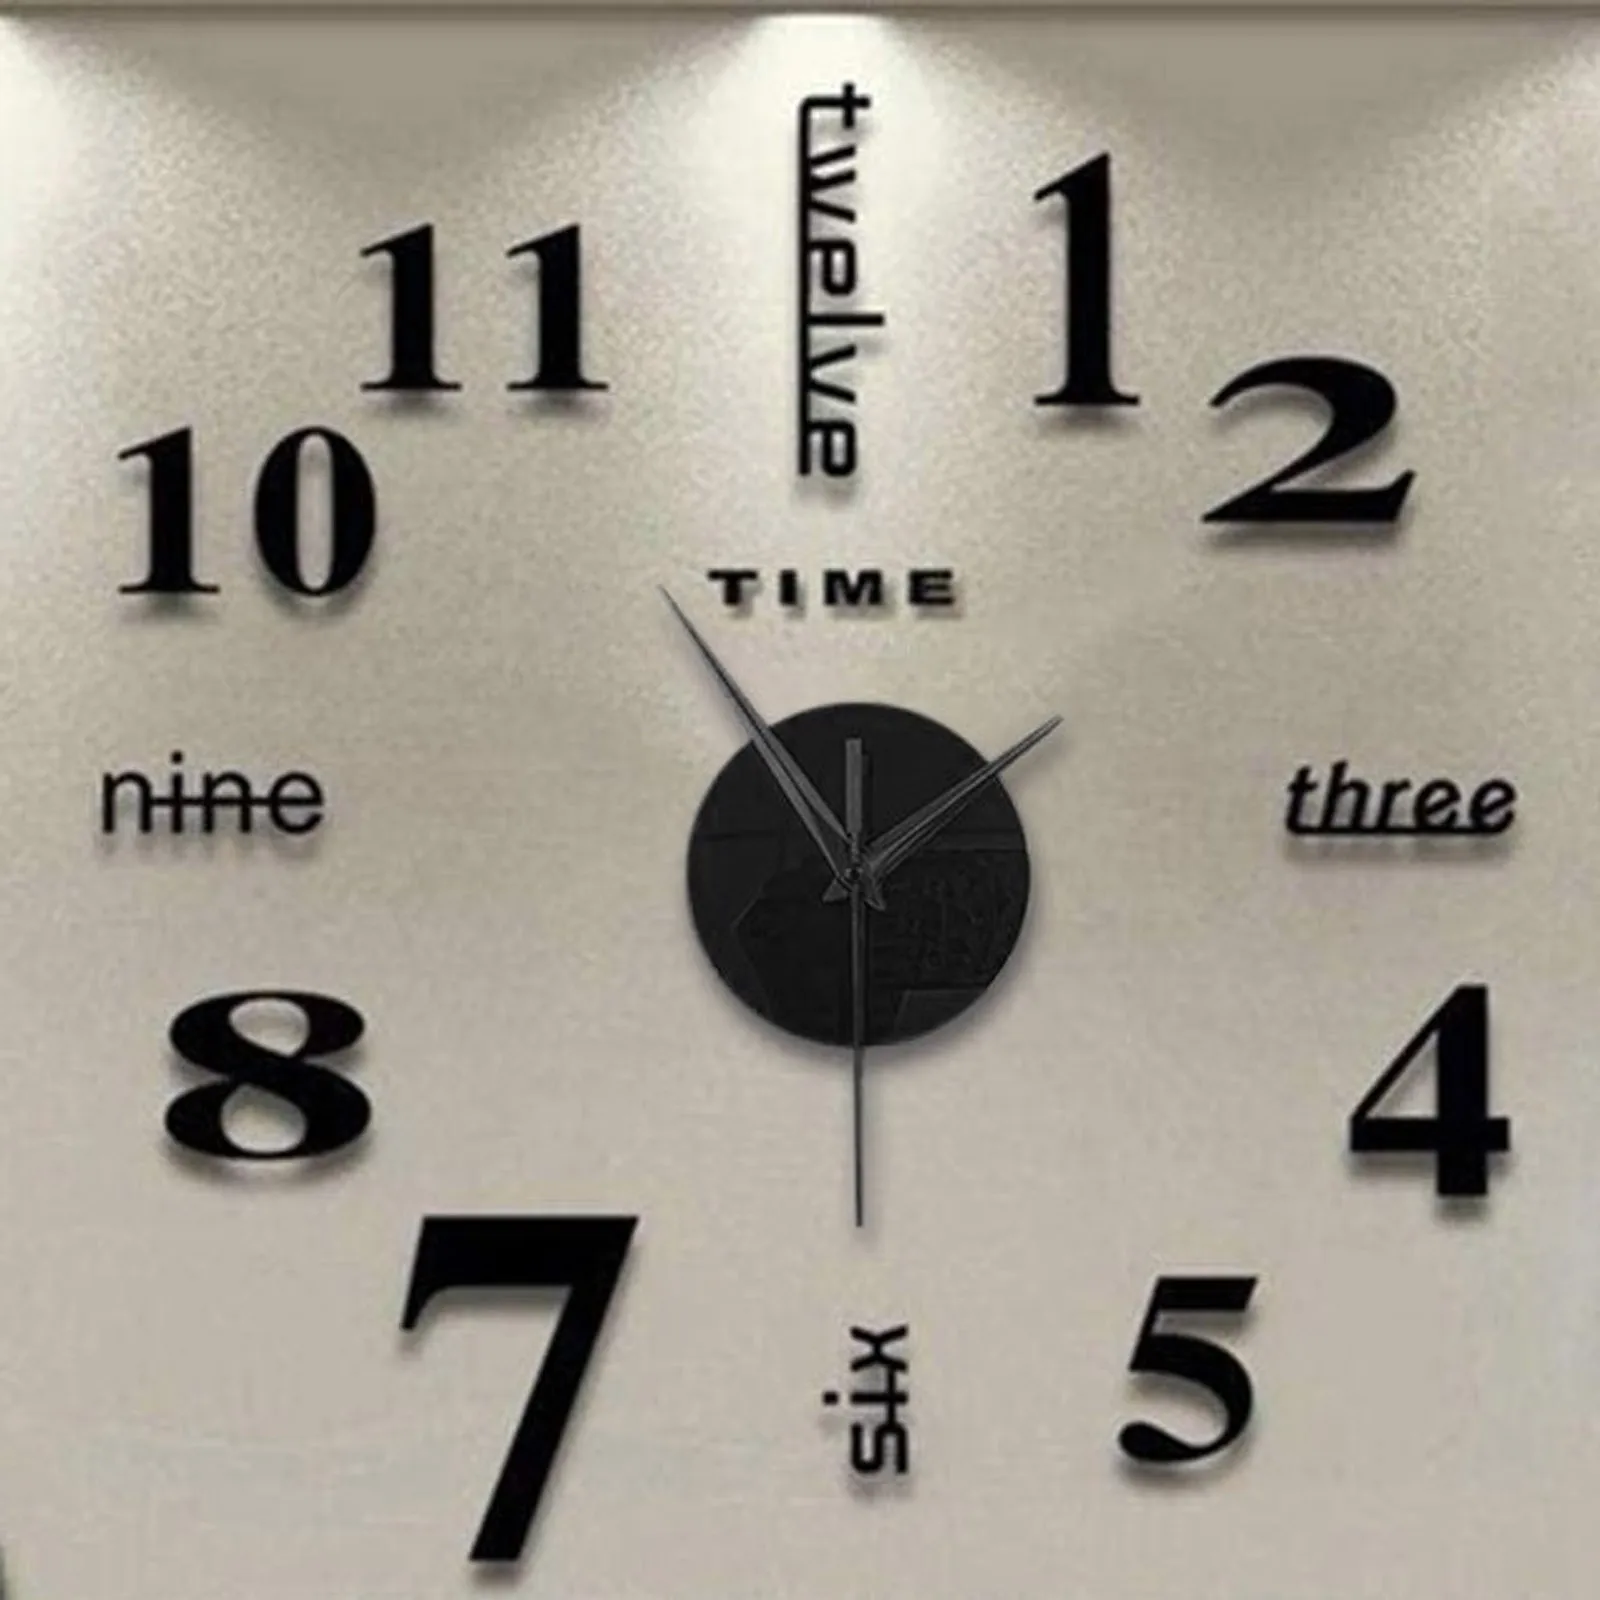 Frameless Diy Wall Mute Clock 3d Mirror Sticker Home Decor Wall Mute Clock 12-hour Display Wall Clock With Time Mark 50x50cm